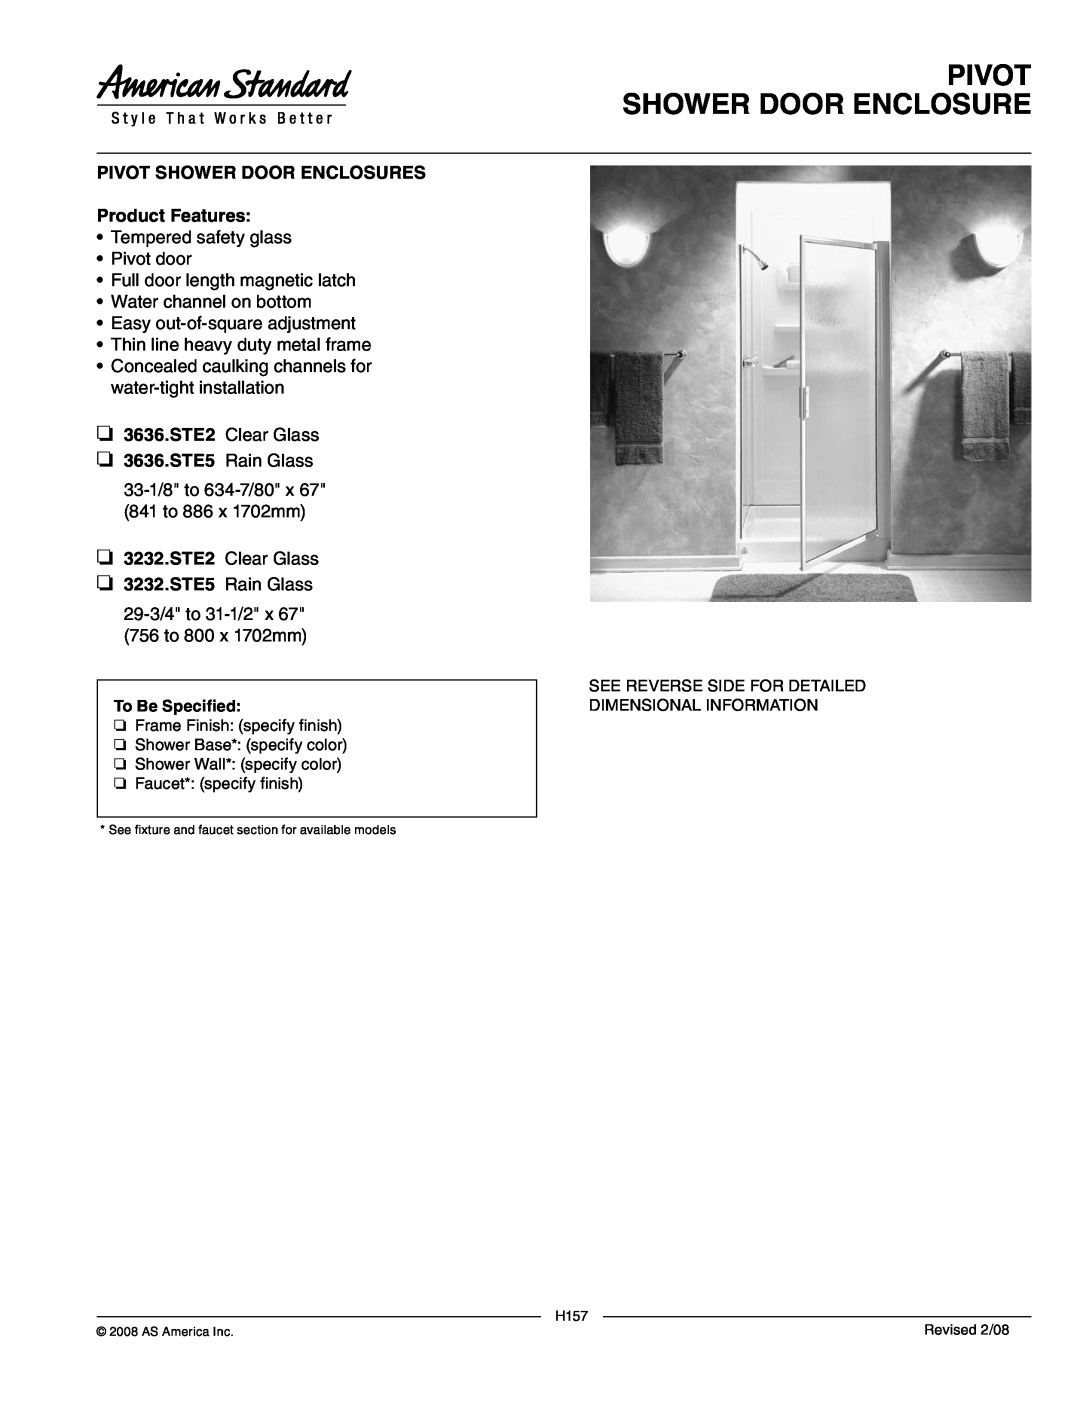 American Standard 3636.STE5, 3636.STE2 manual Pivot Shower Door Enclosure, PIVOT SHOWER DOOR ENCLOSURES Product Features 